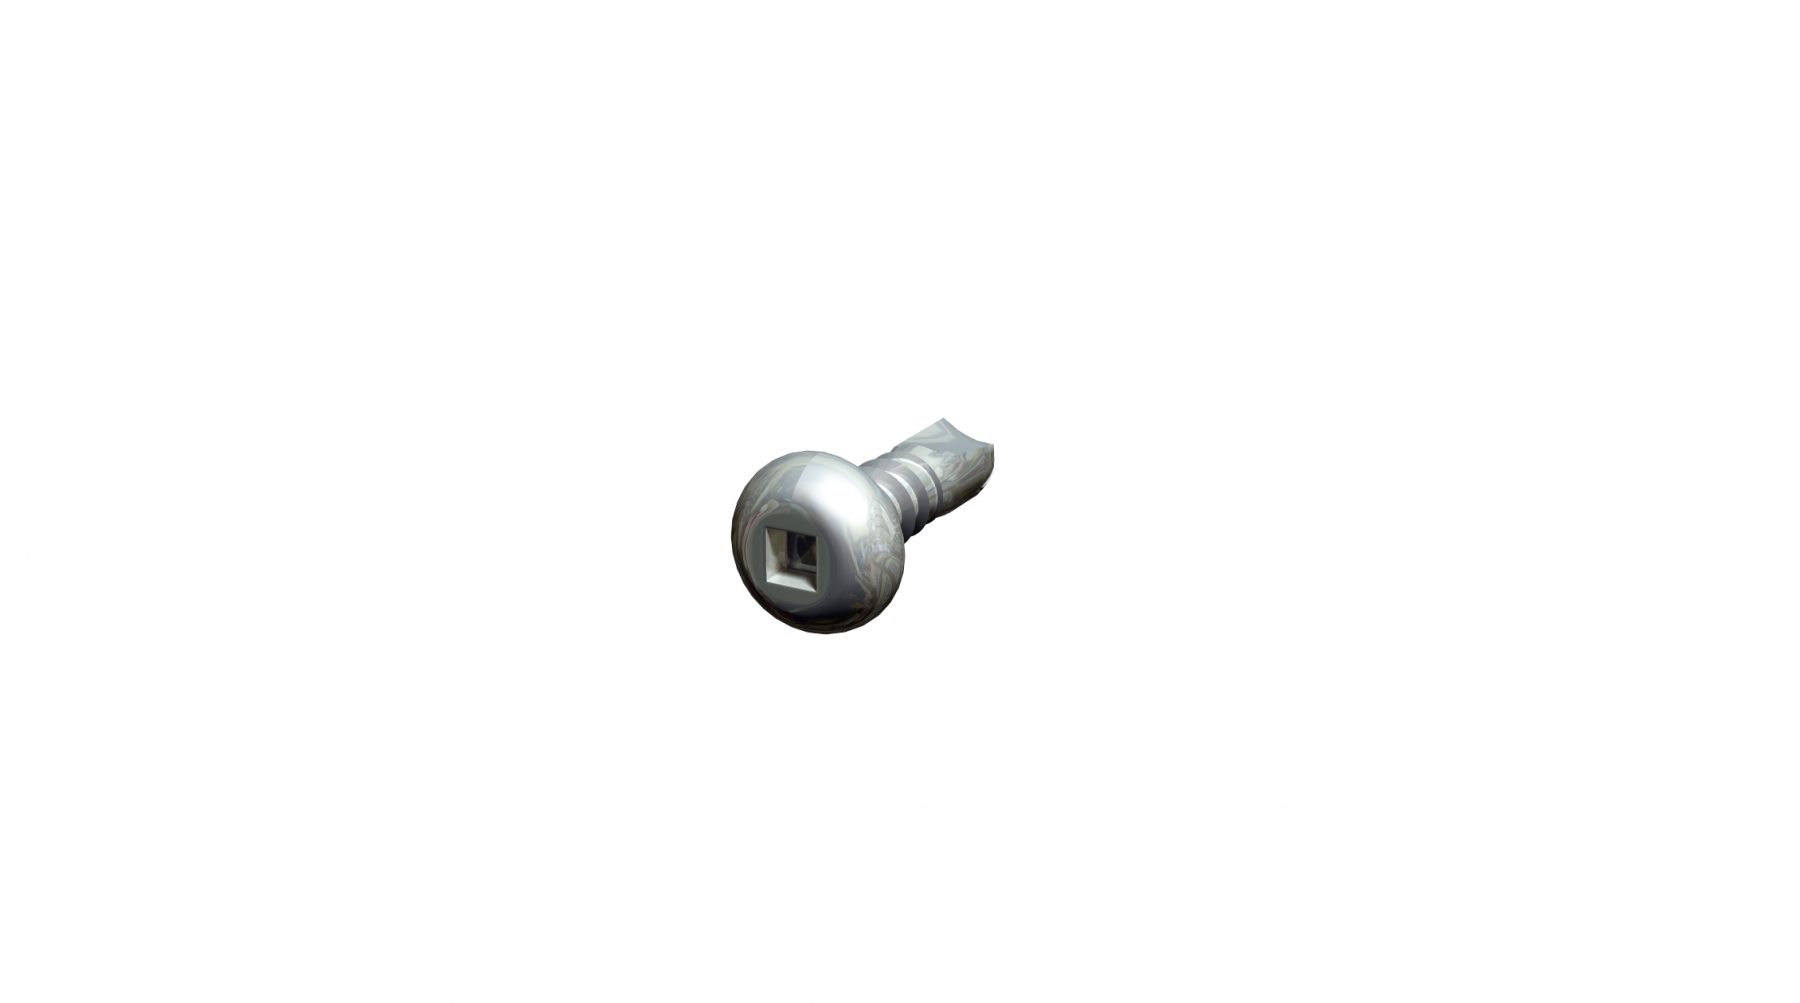 13mm pan head screw